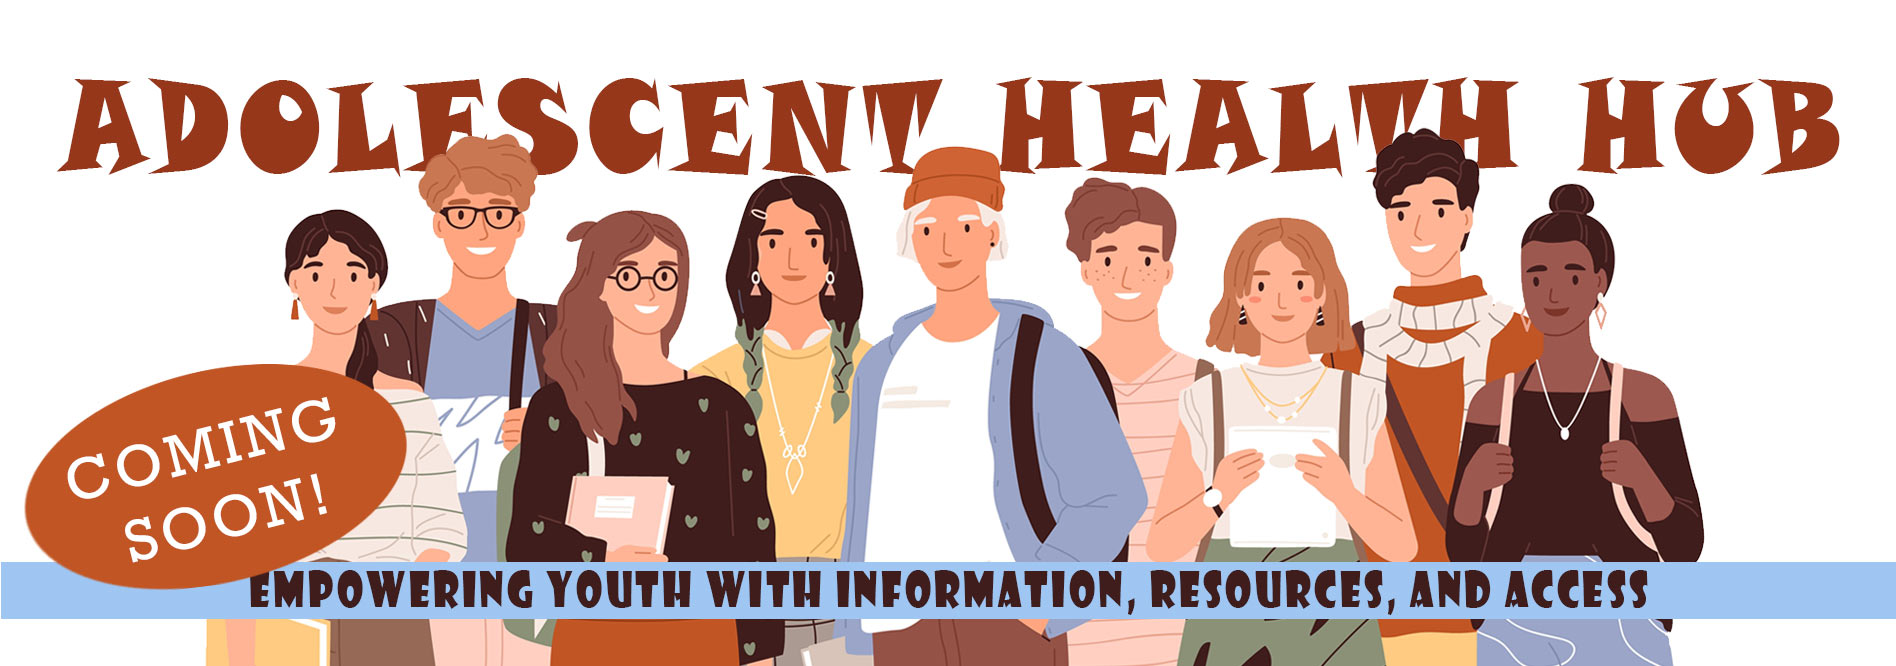 Adolescent Health Hub coming soon!